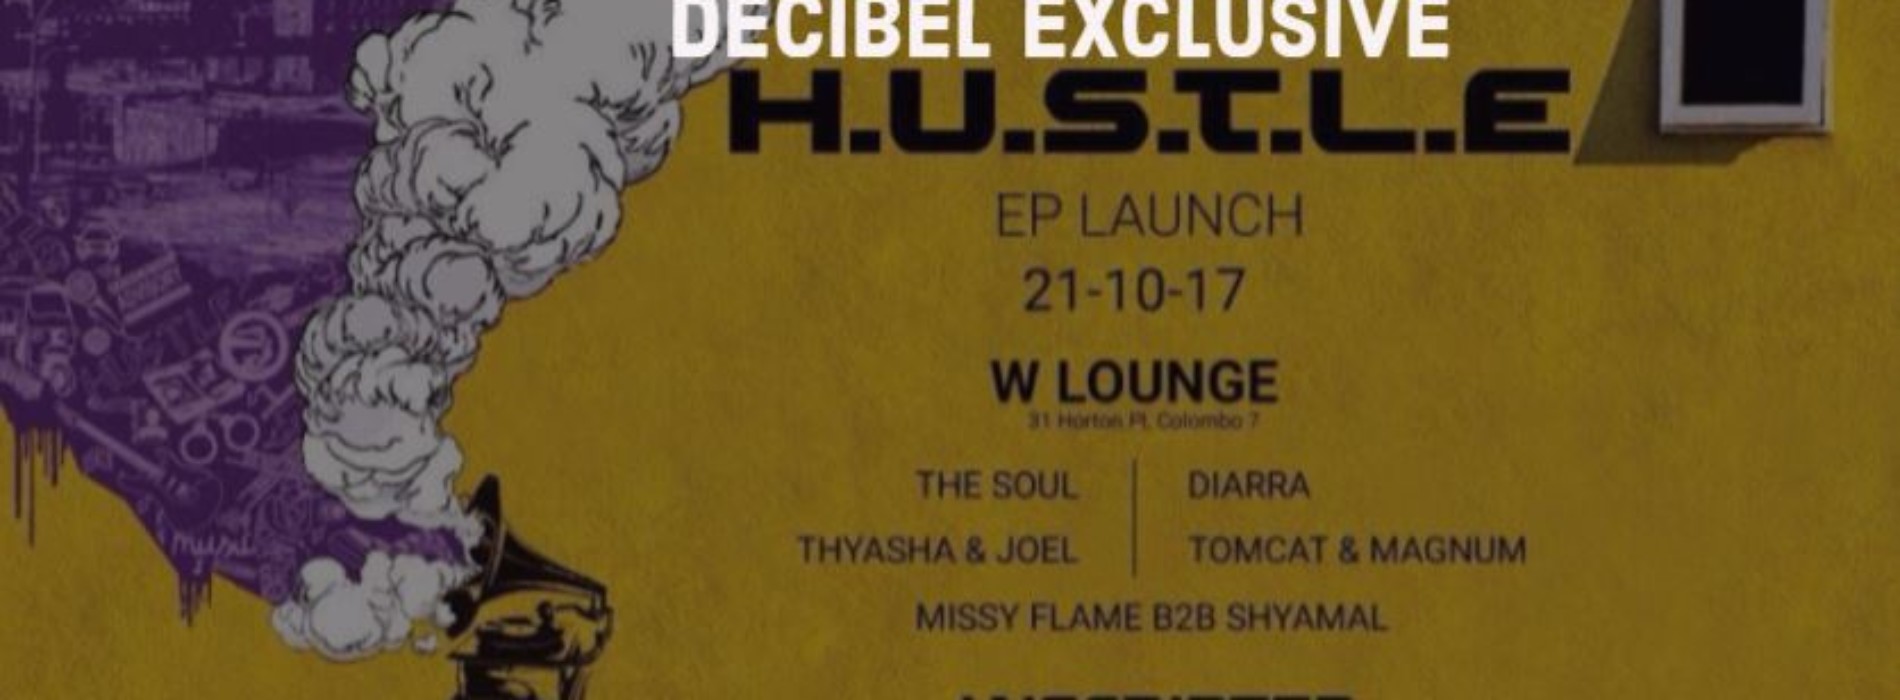 Decibel Exclusive : Unscripted EP Launch (H.U.S.T.L.E)